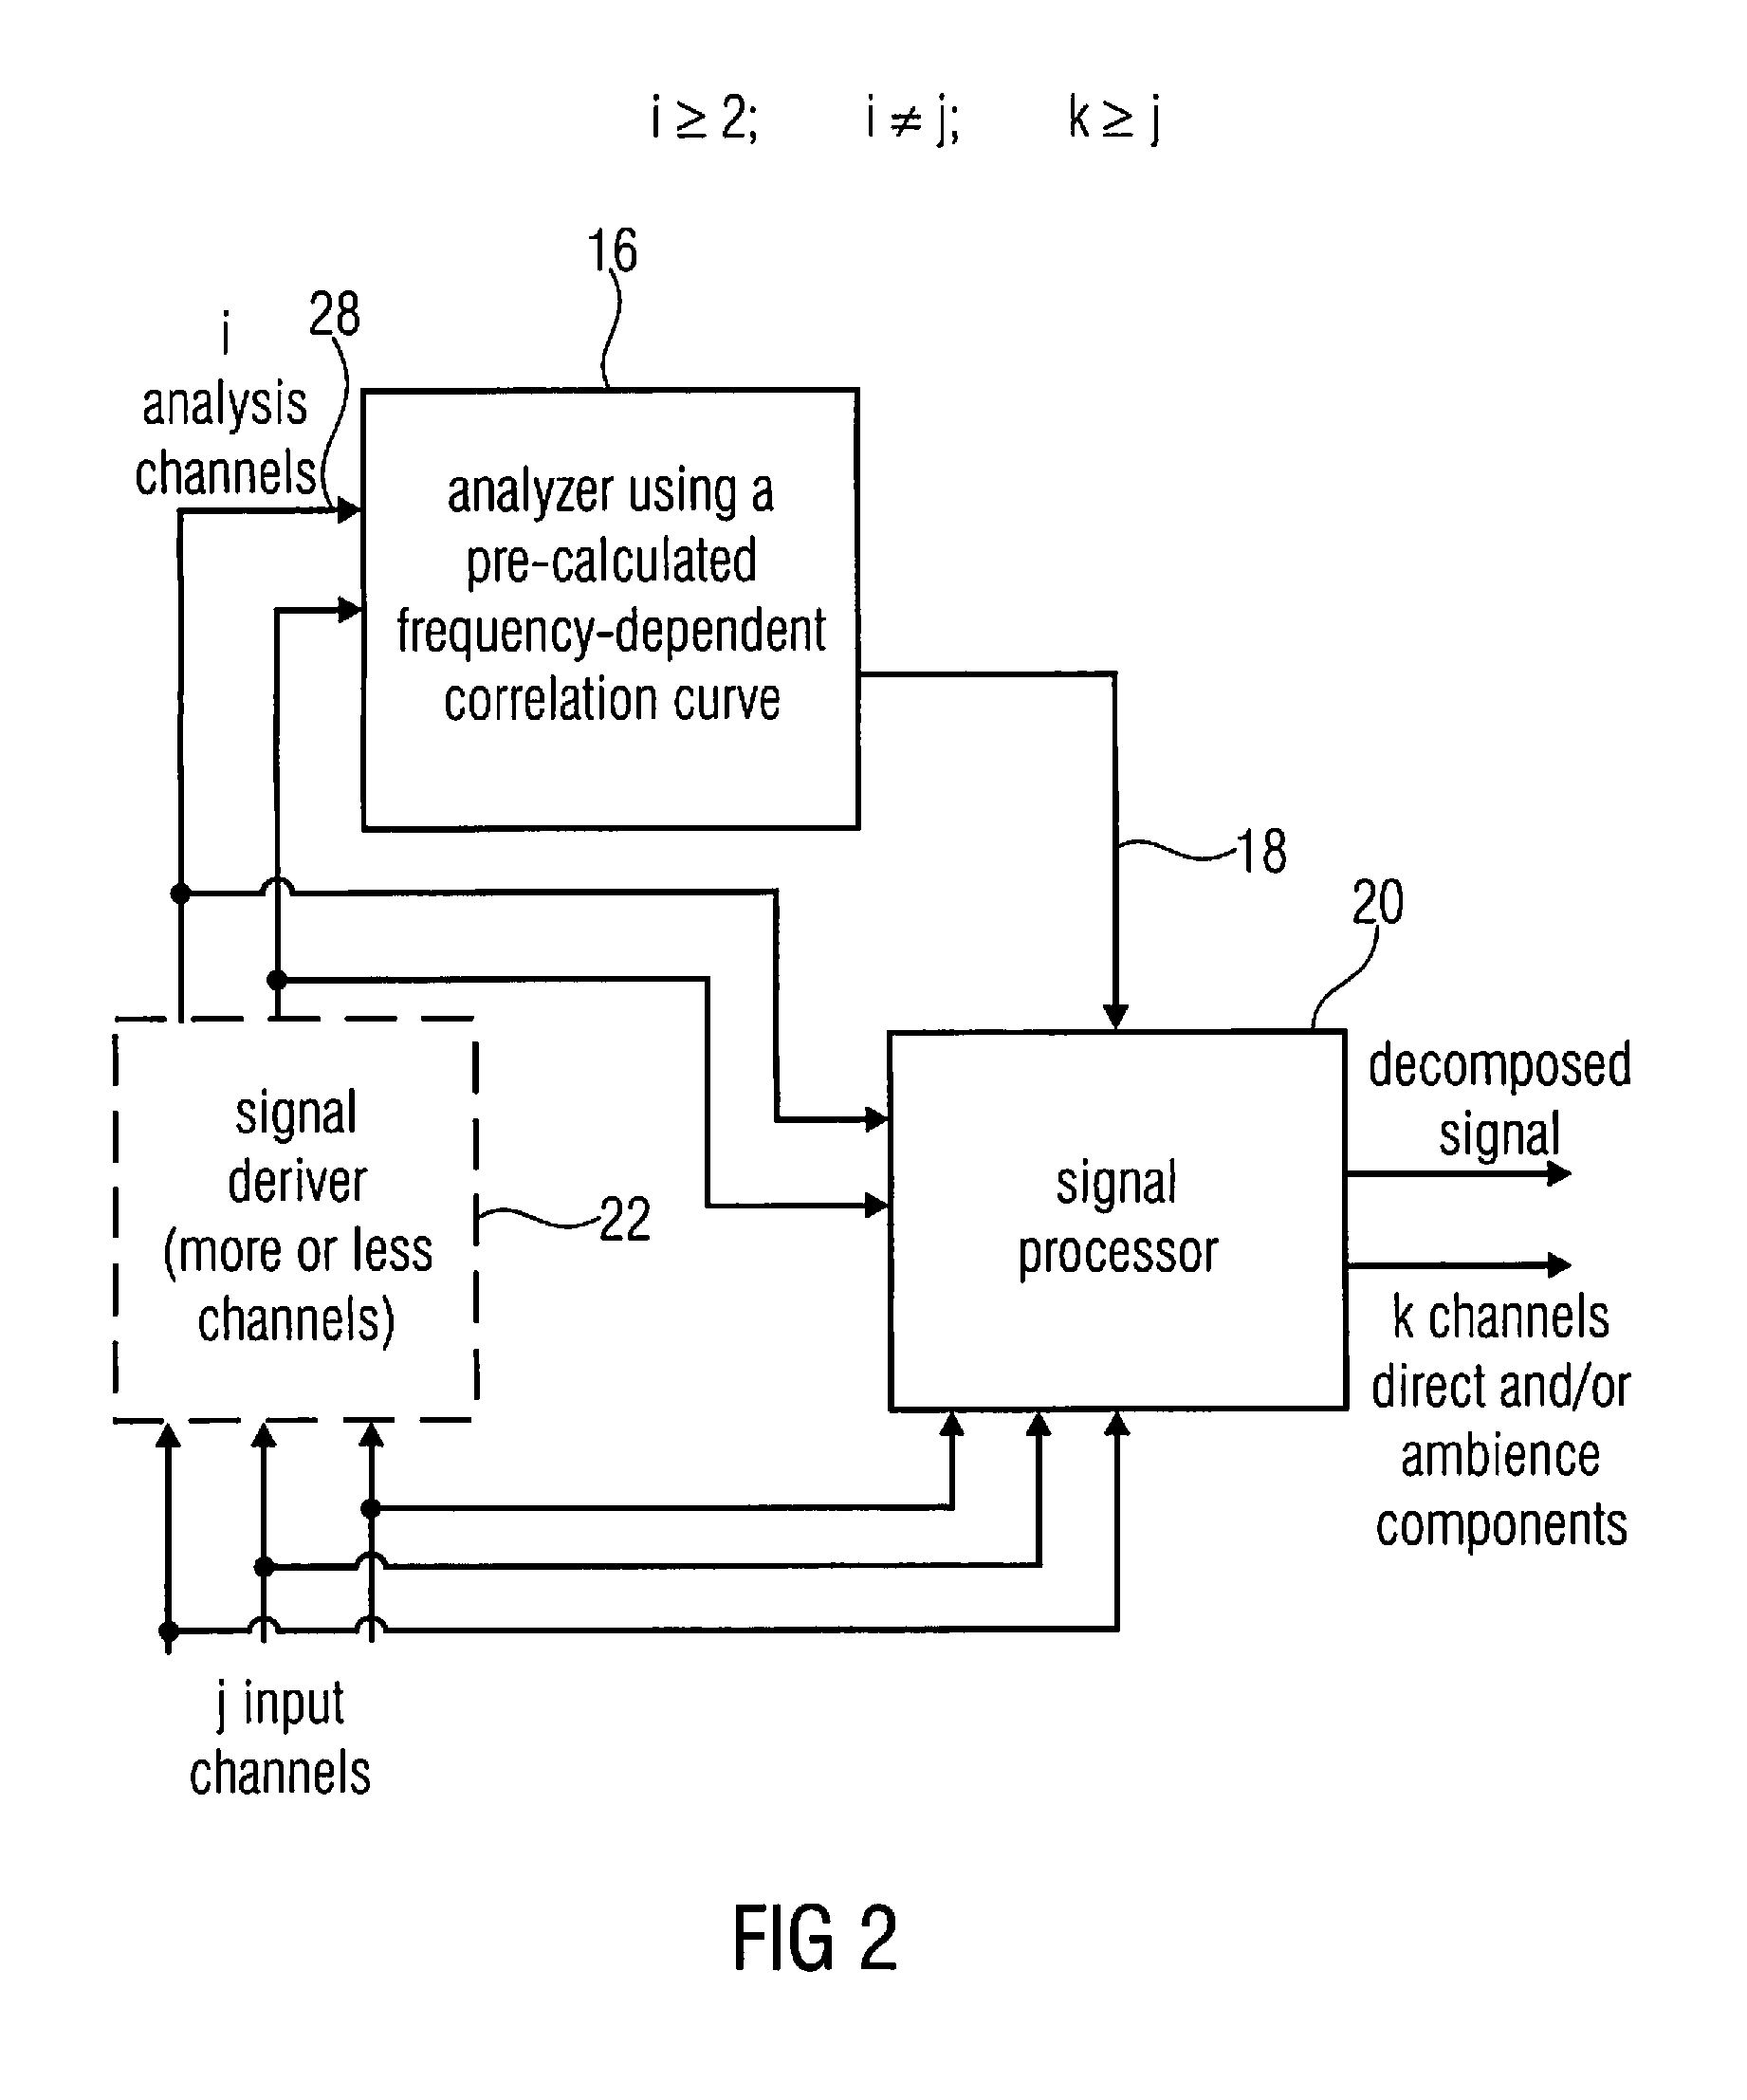 Apparatus and Method for Decomposing an Input Signal Using a Downmixer